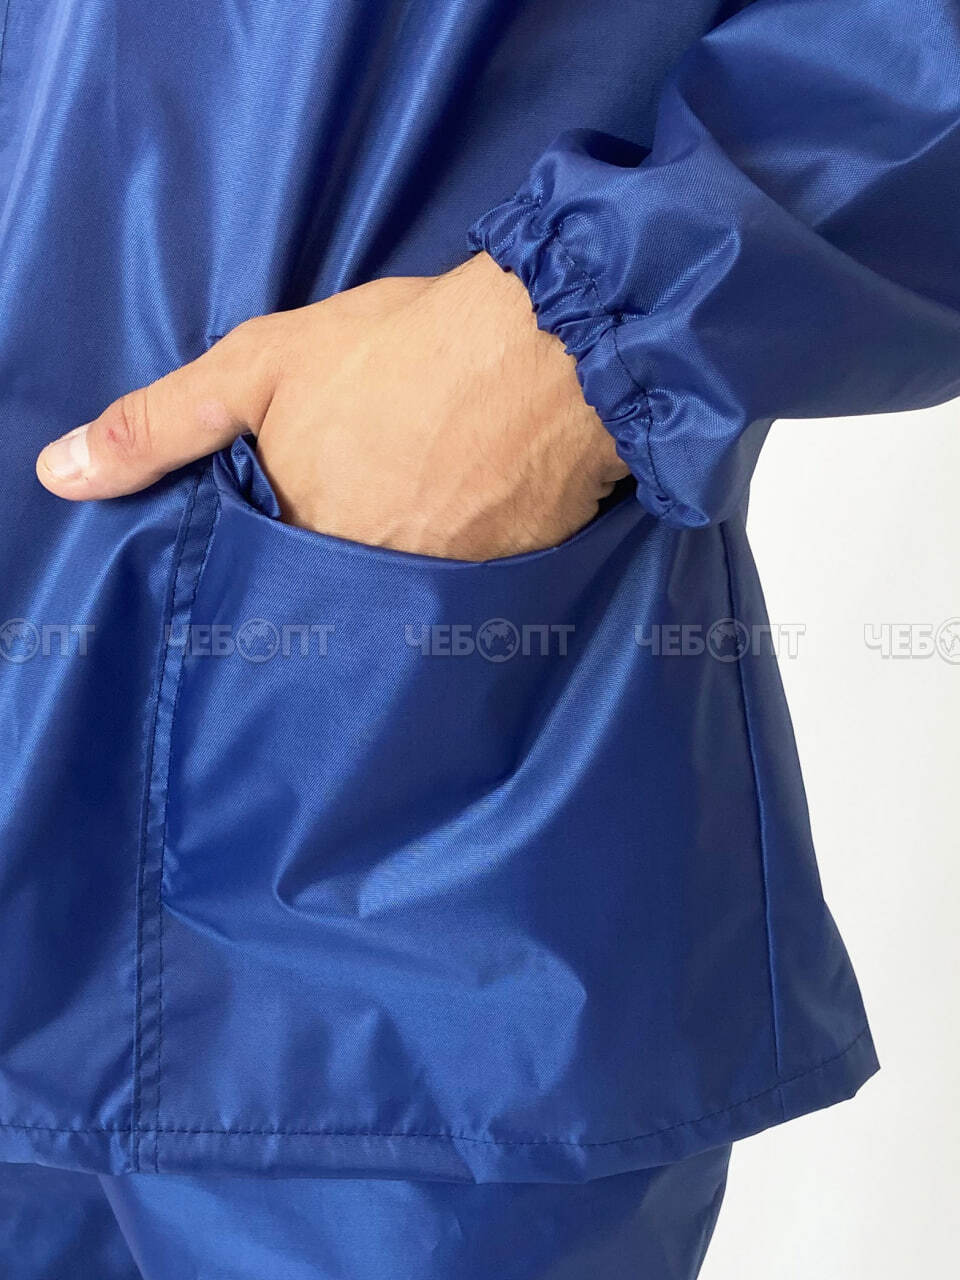 Костюм-дождевик (куртка, брюки),ЧЕБПРО,размер 52-54,100% полиэстер, Арт. ДожКостМуж/синий, МПС [15] СобПр. ЧЕБОПТ.